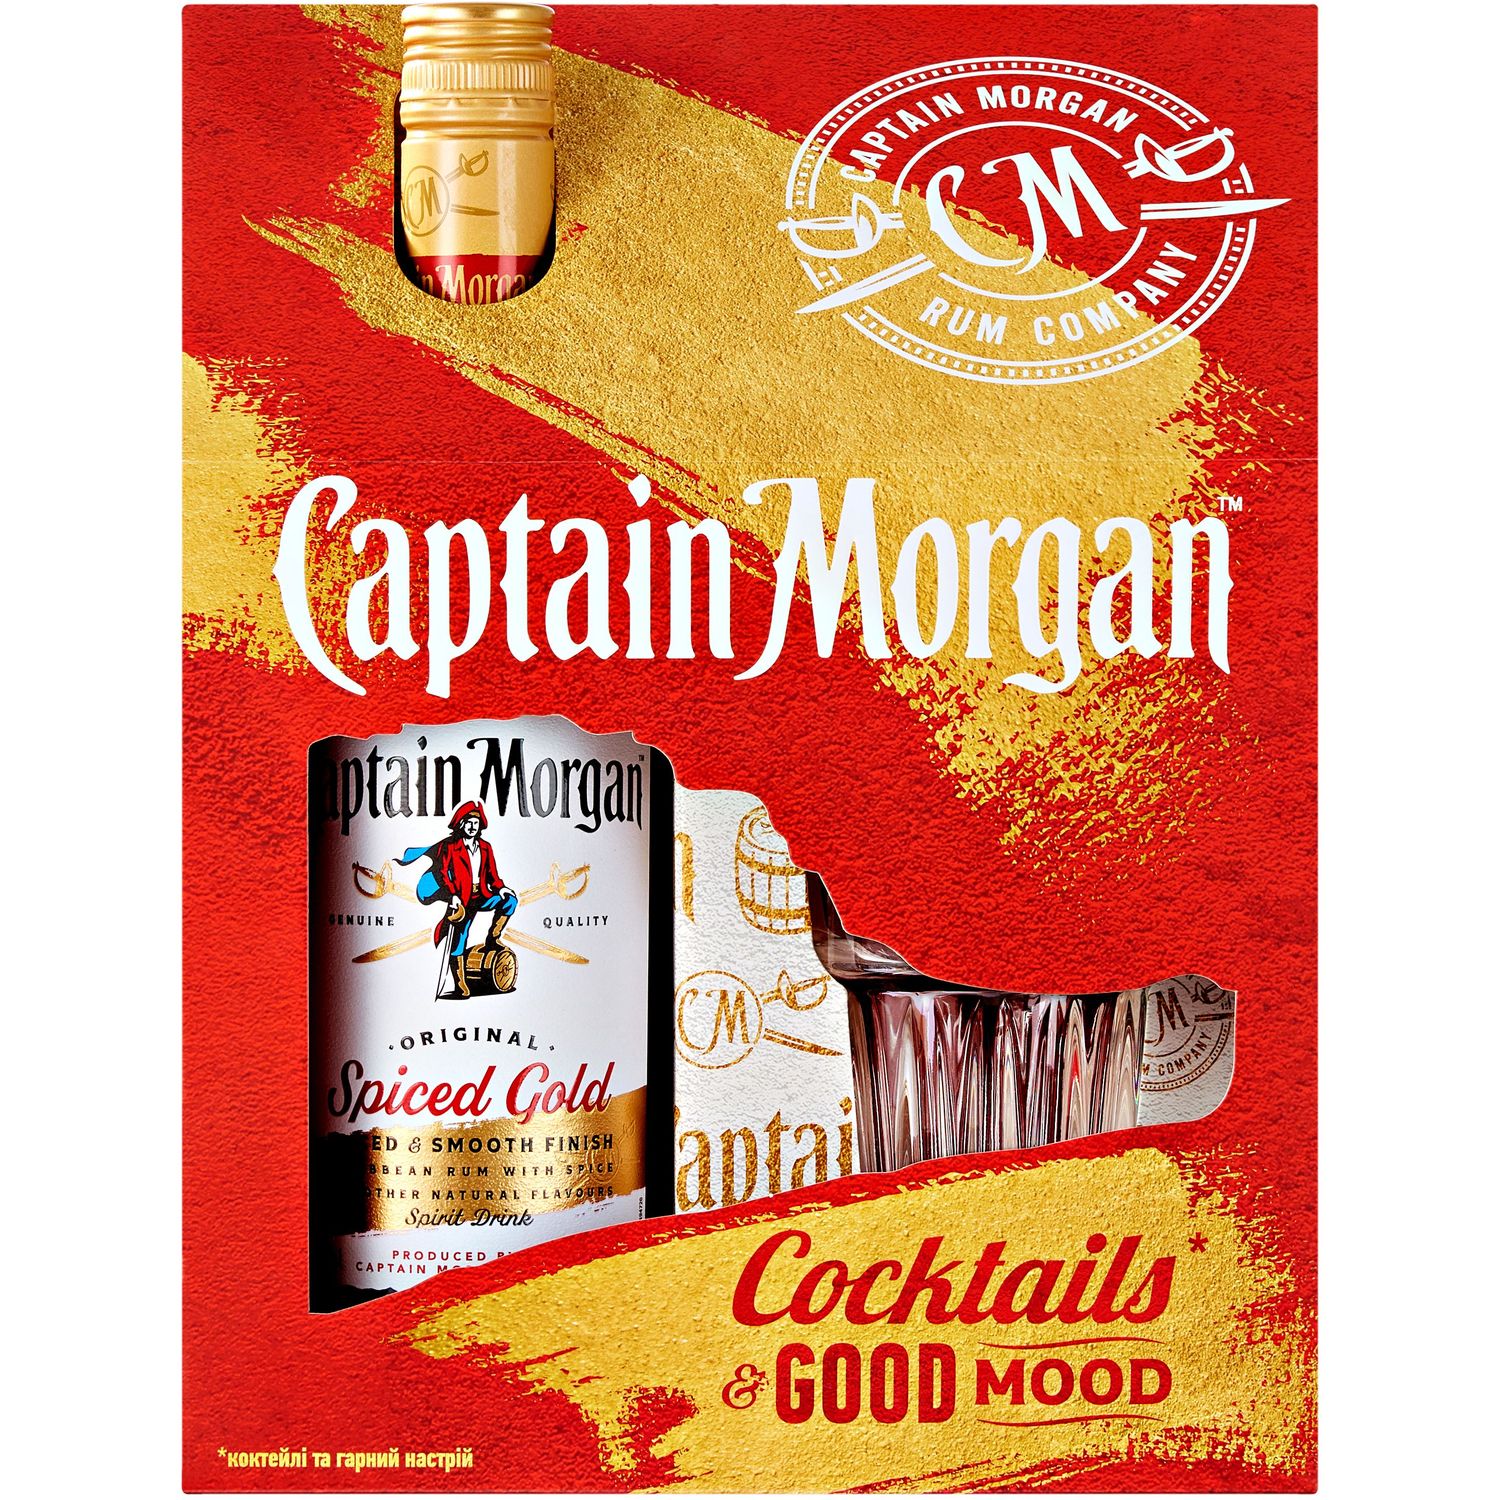 Ромовый напиток Captain Morgan Spiced Gold, 35%, 0,7 л + стакан - фото 3